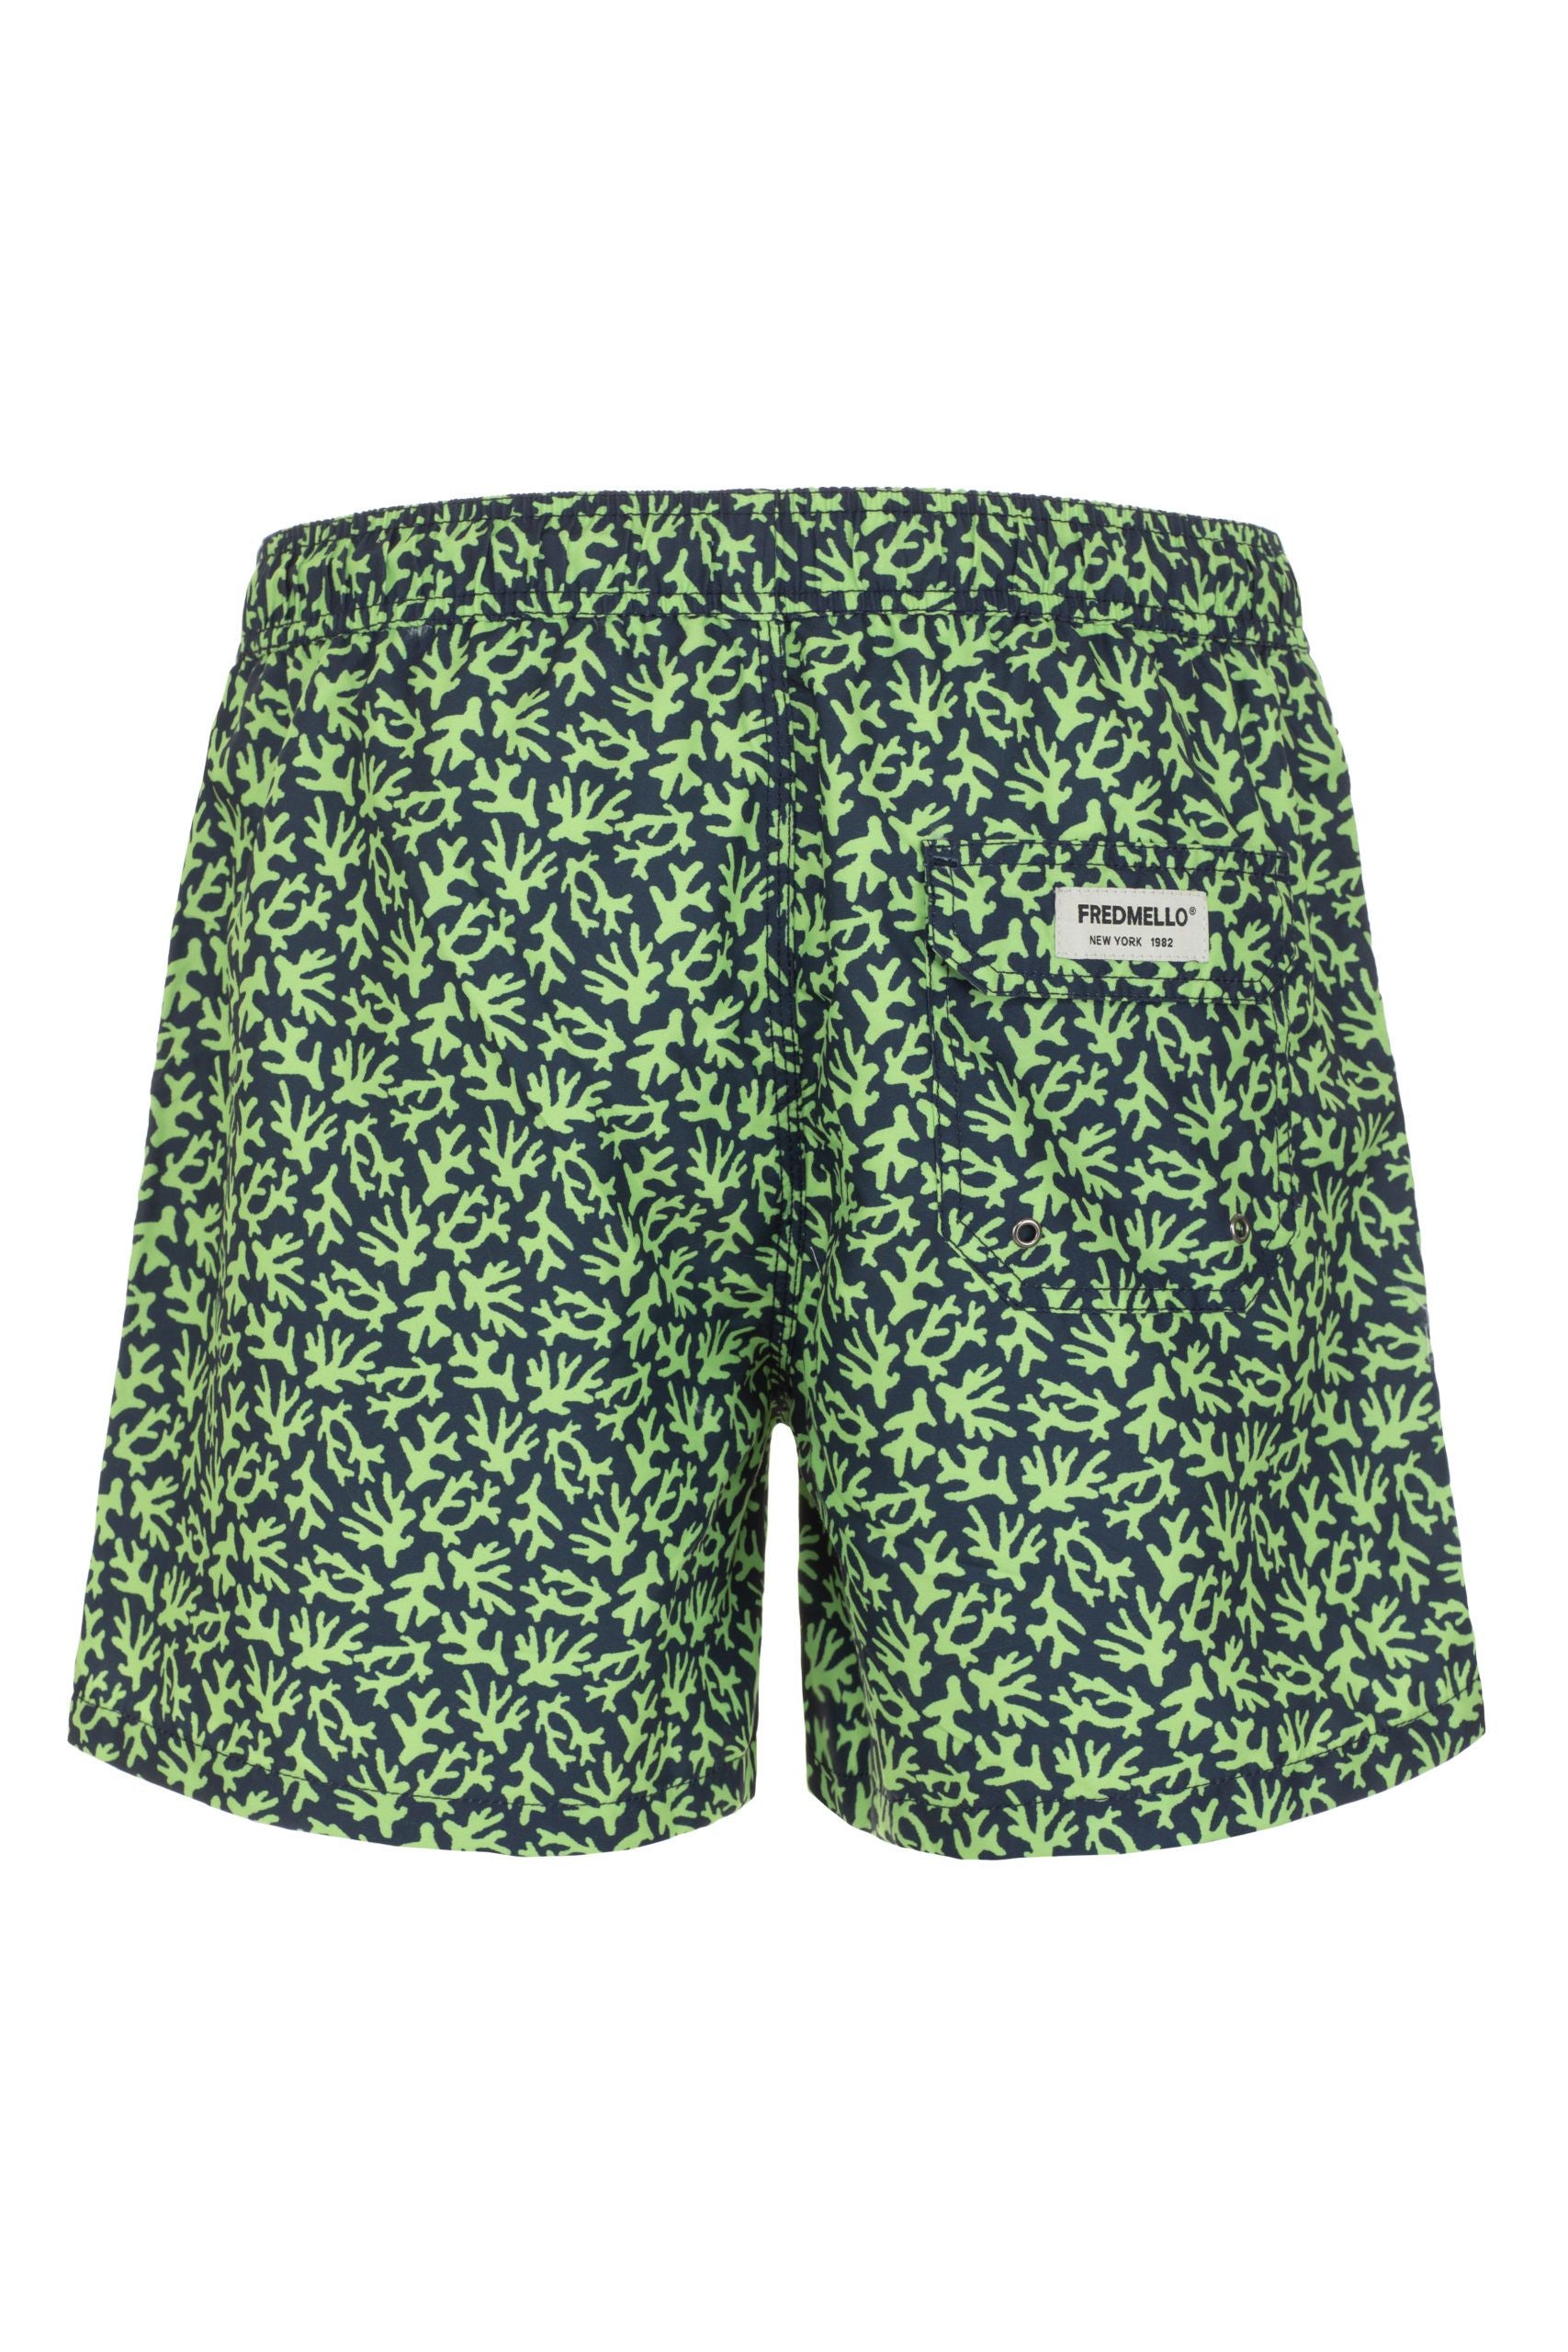 Emerald Green Beach Shorts for Trendy Summer Days